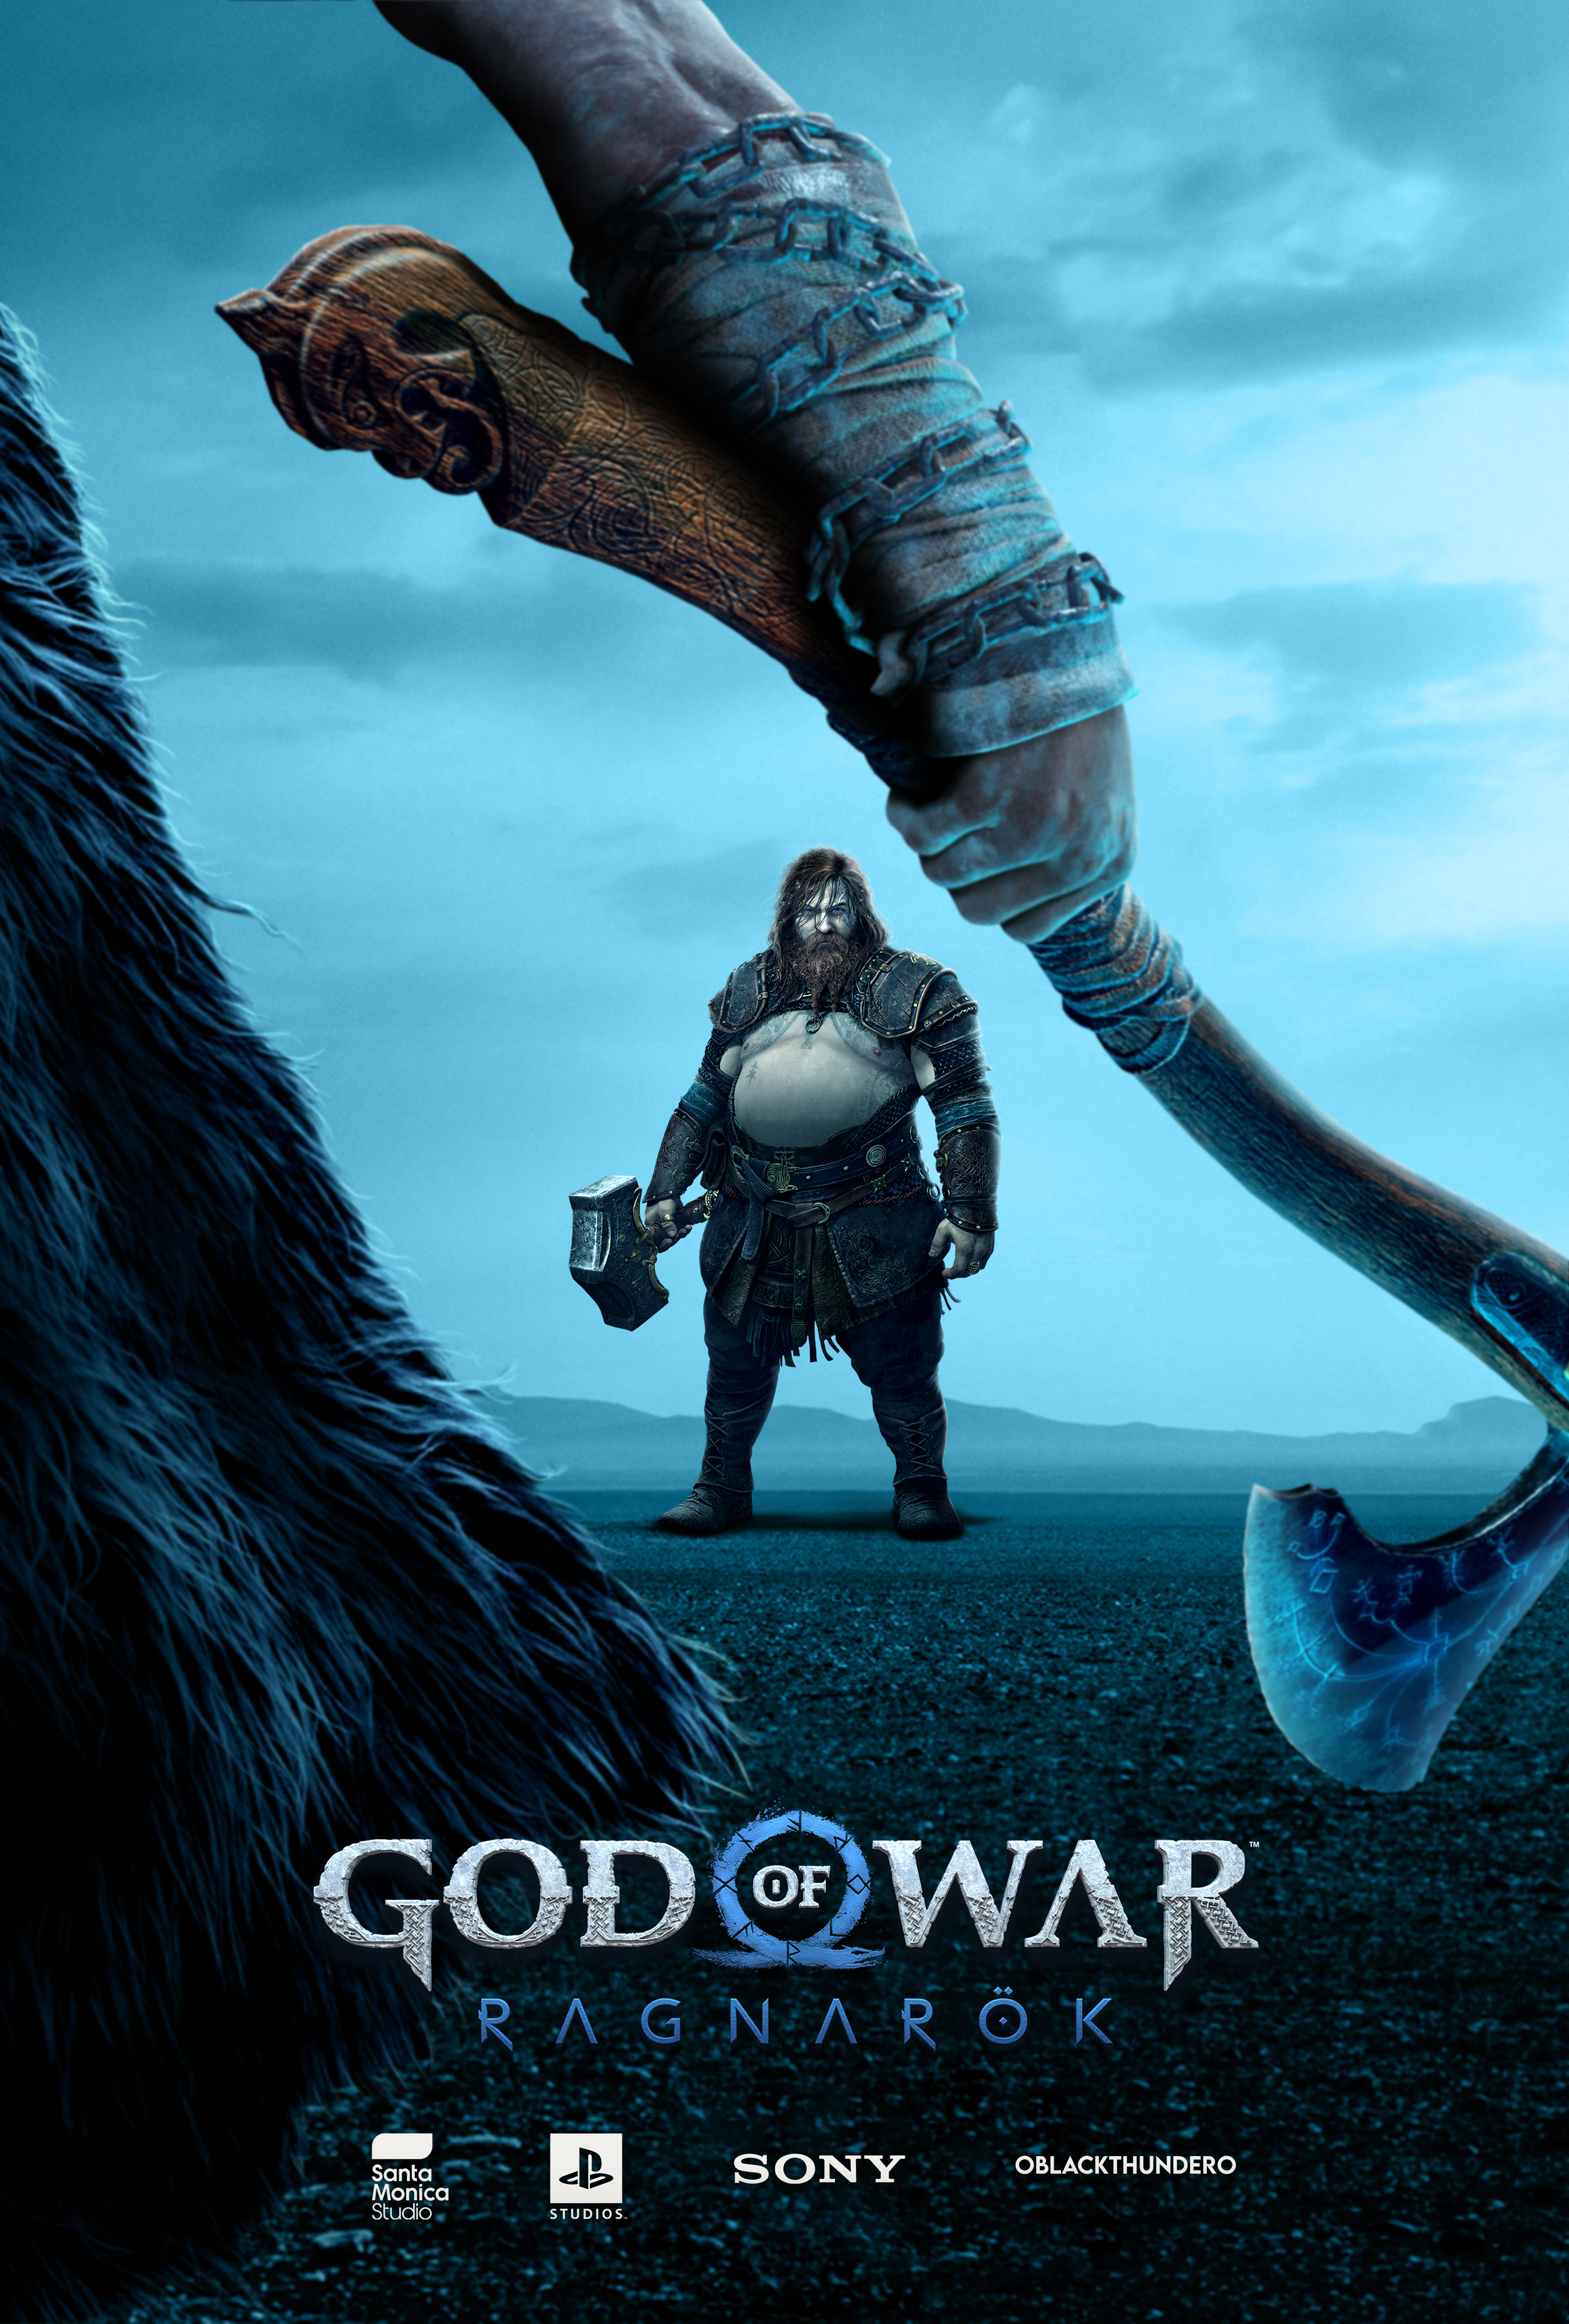 Black Thunder ⚡️ on X: Thor ⚡️- God of War Ragnarök #GodofWarRagnarok #PS5  #GodofWar  / X